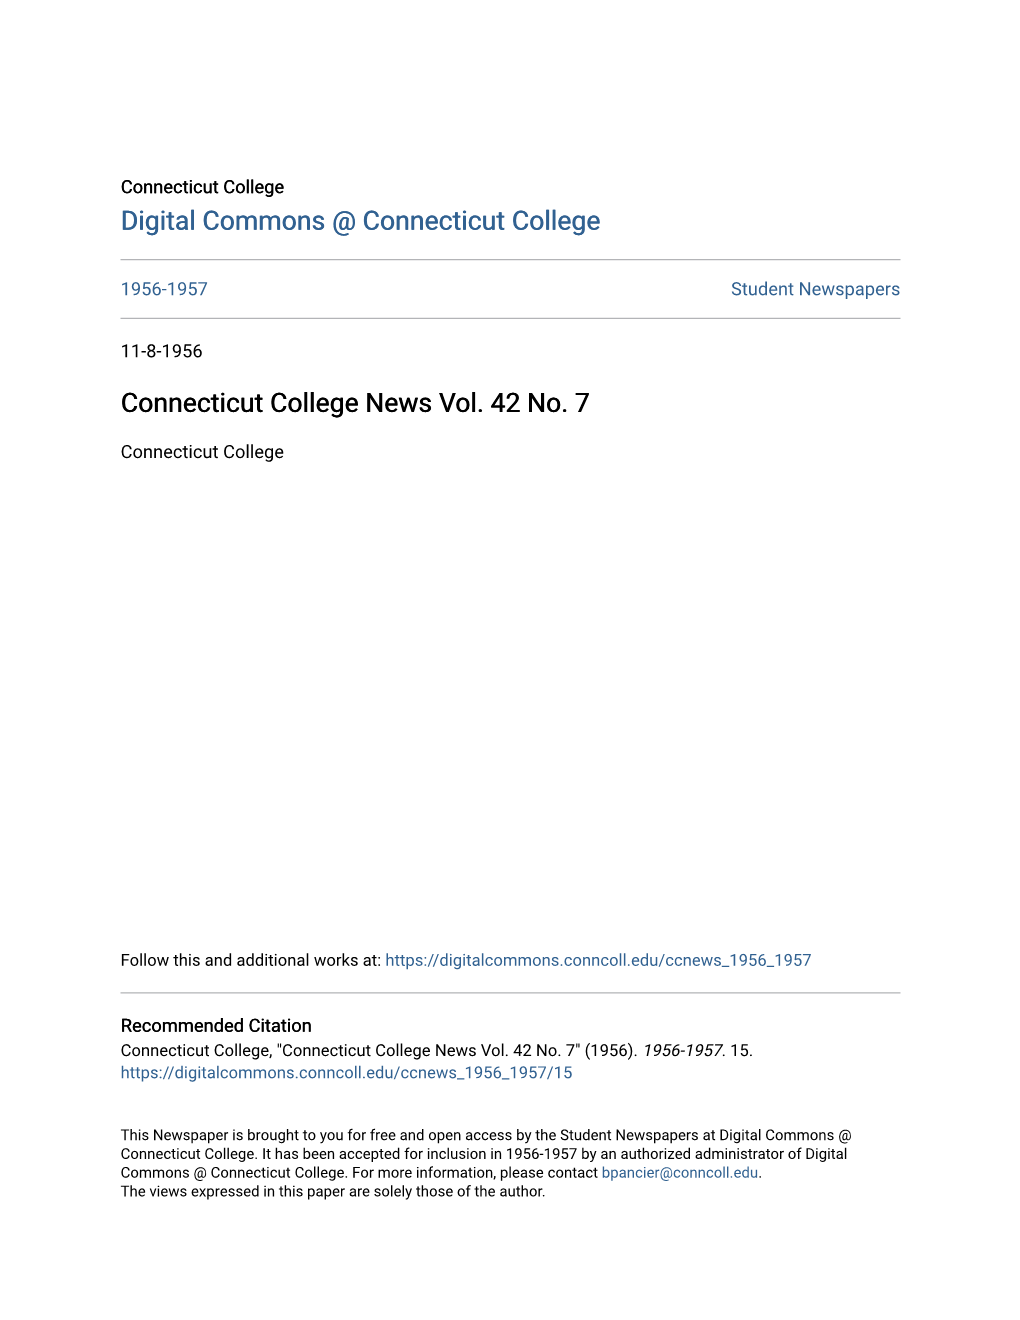 Connecticut College News Vol. 42 No. 7